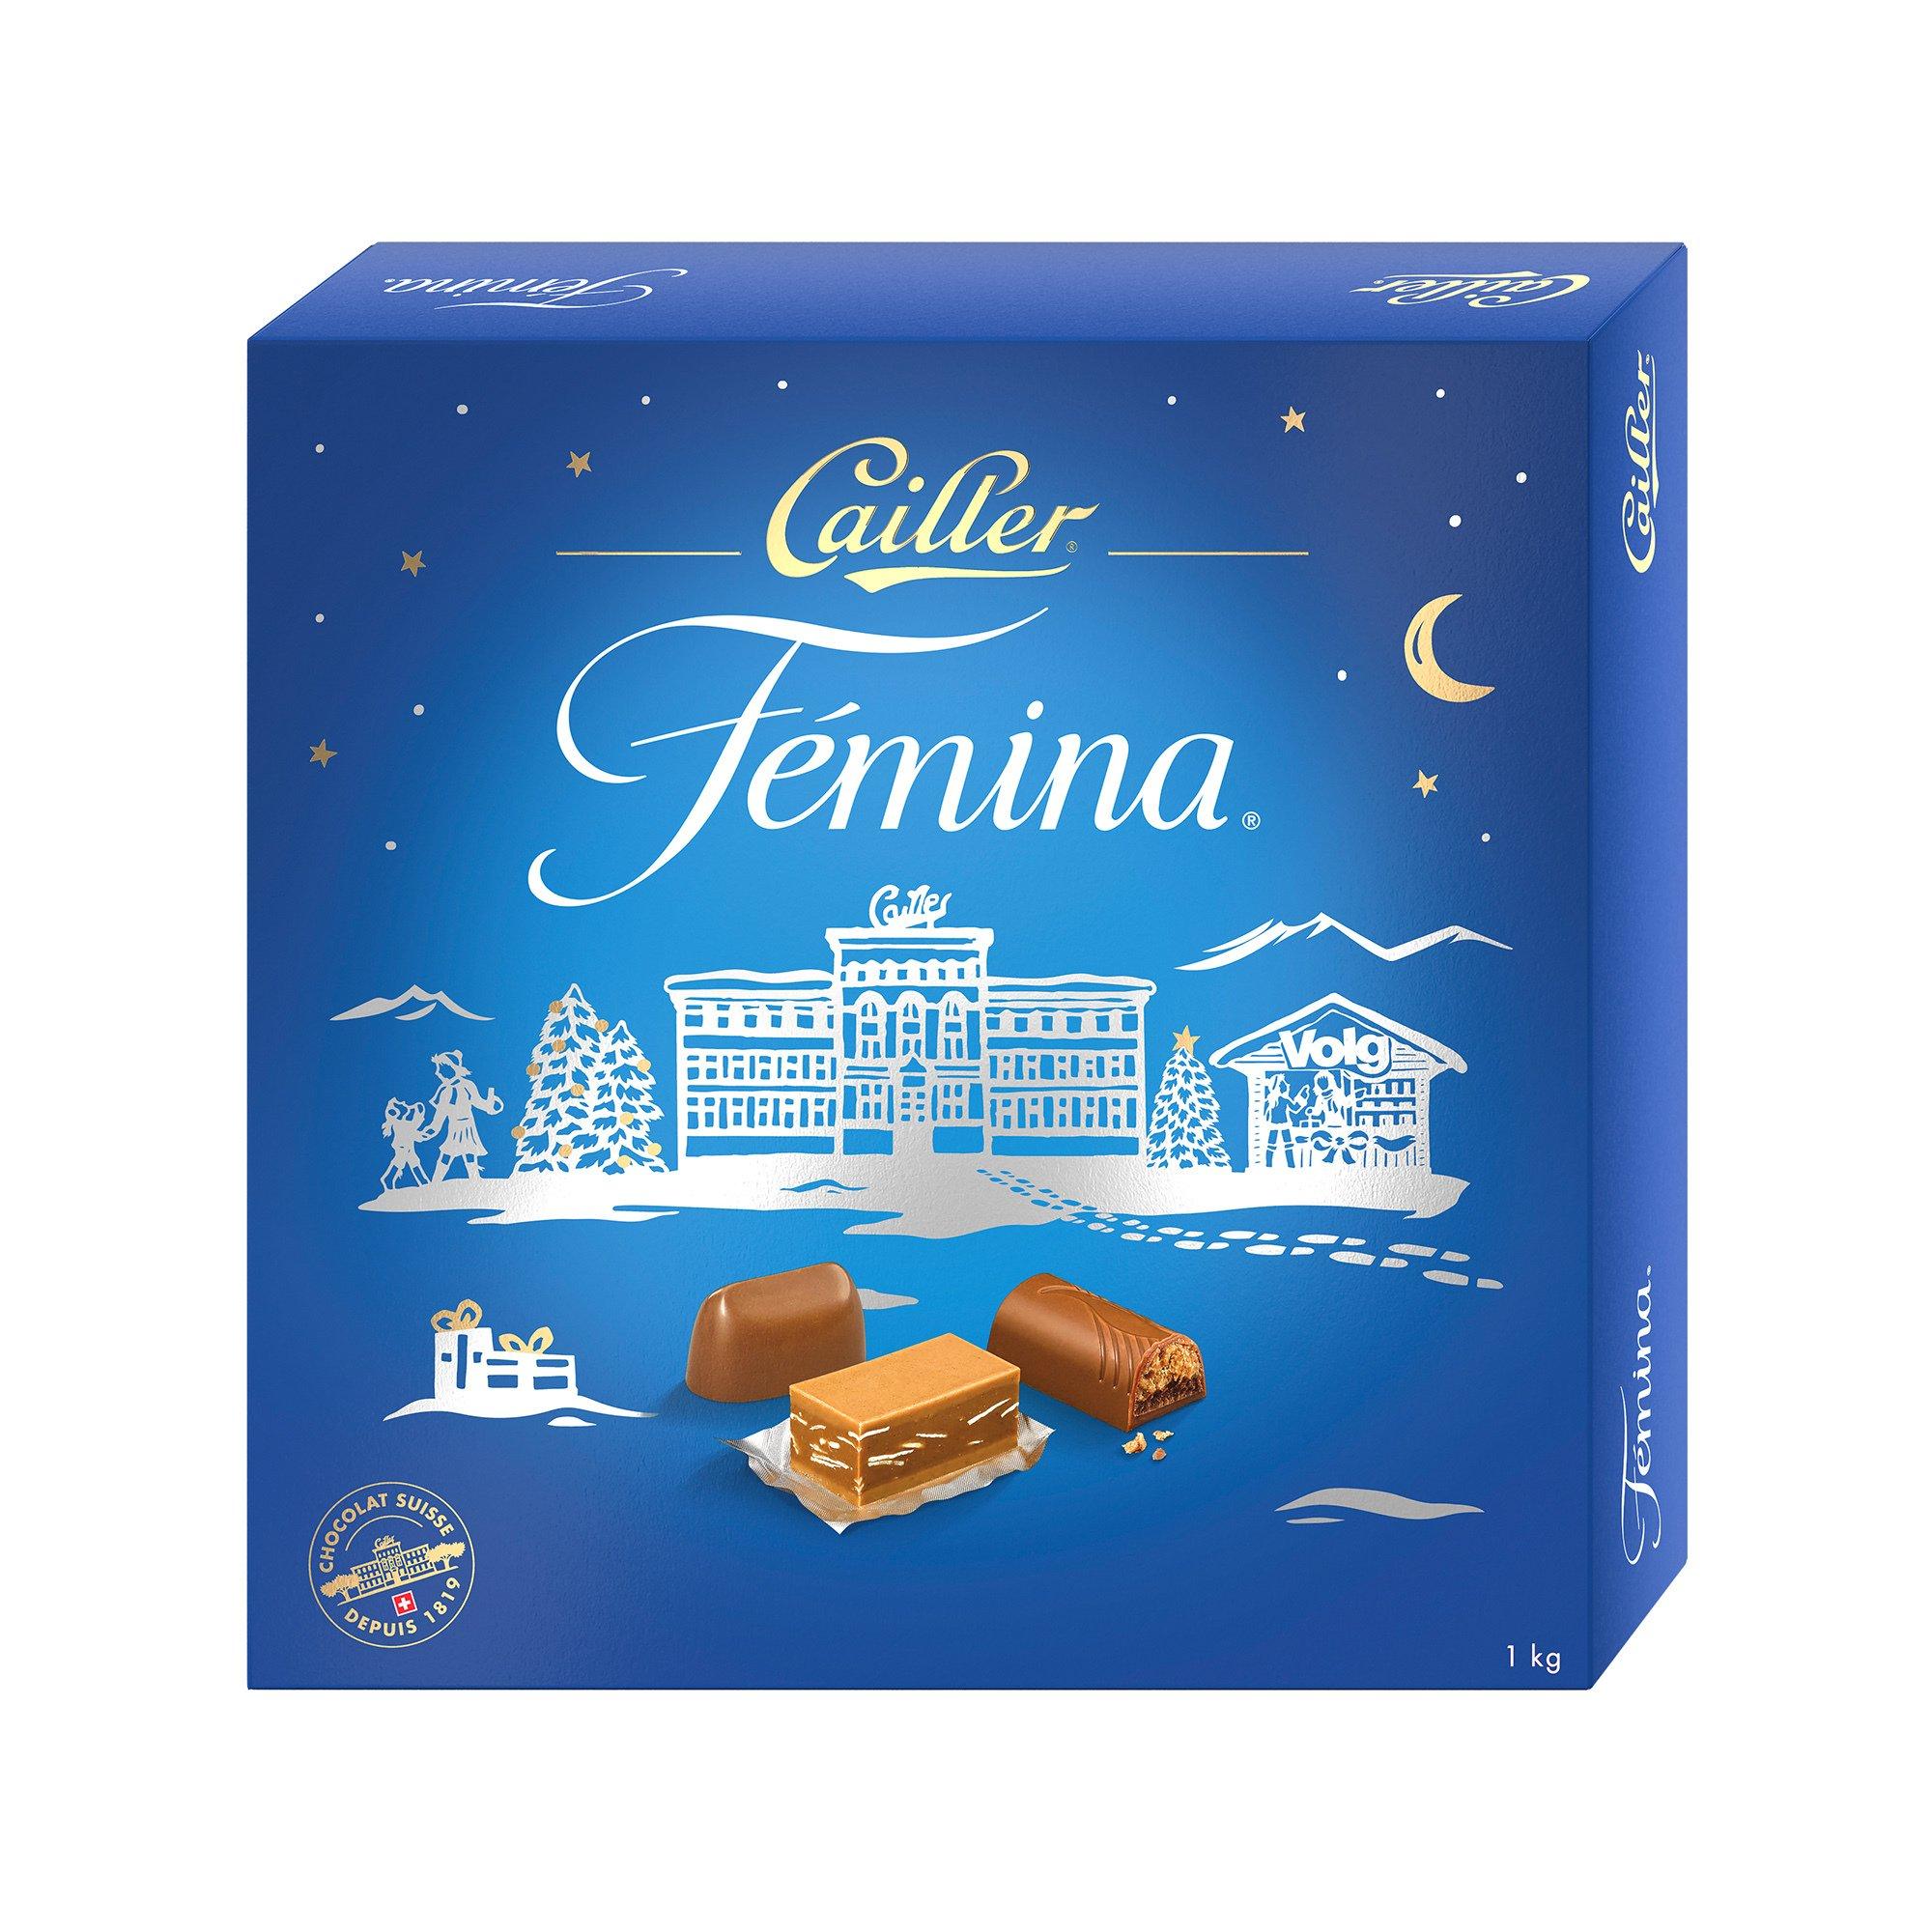 Image of Cailler Fémina - 1 kg